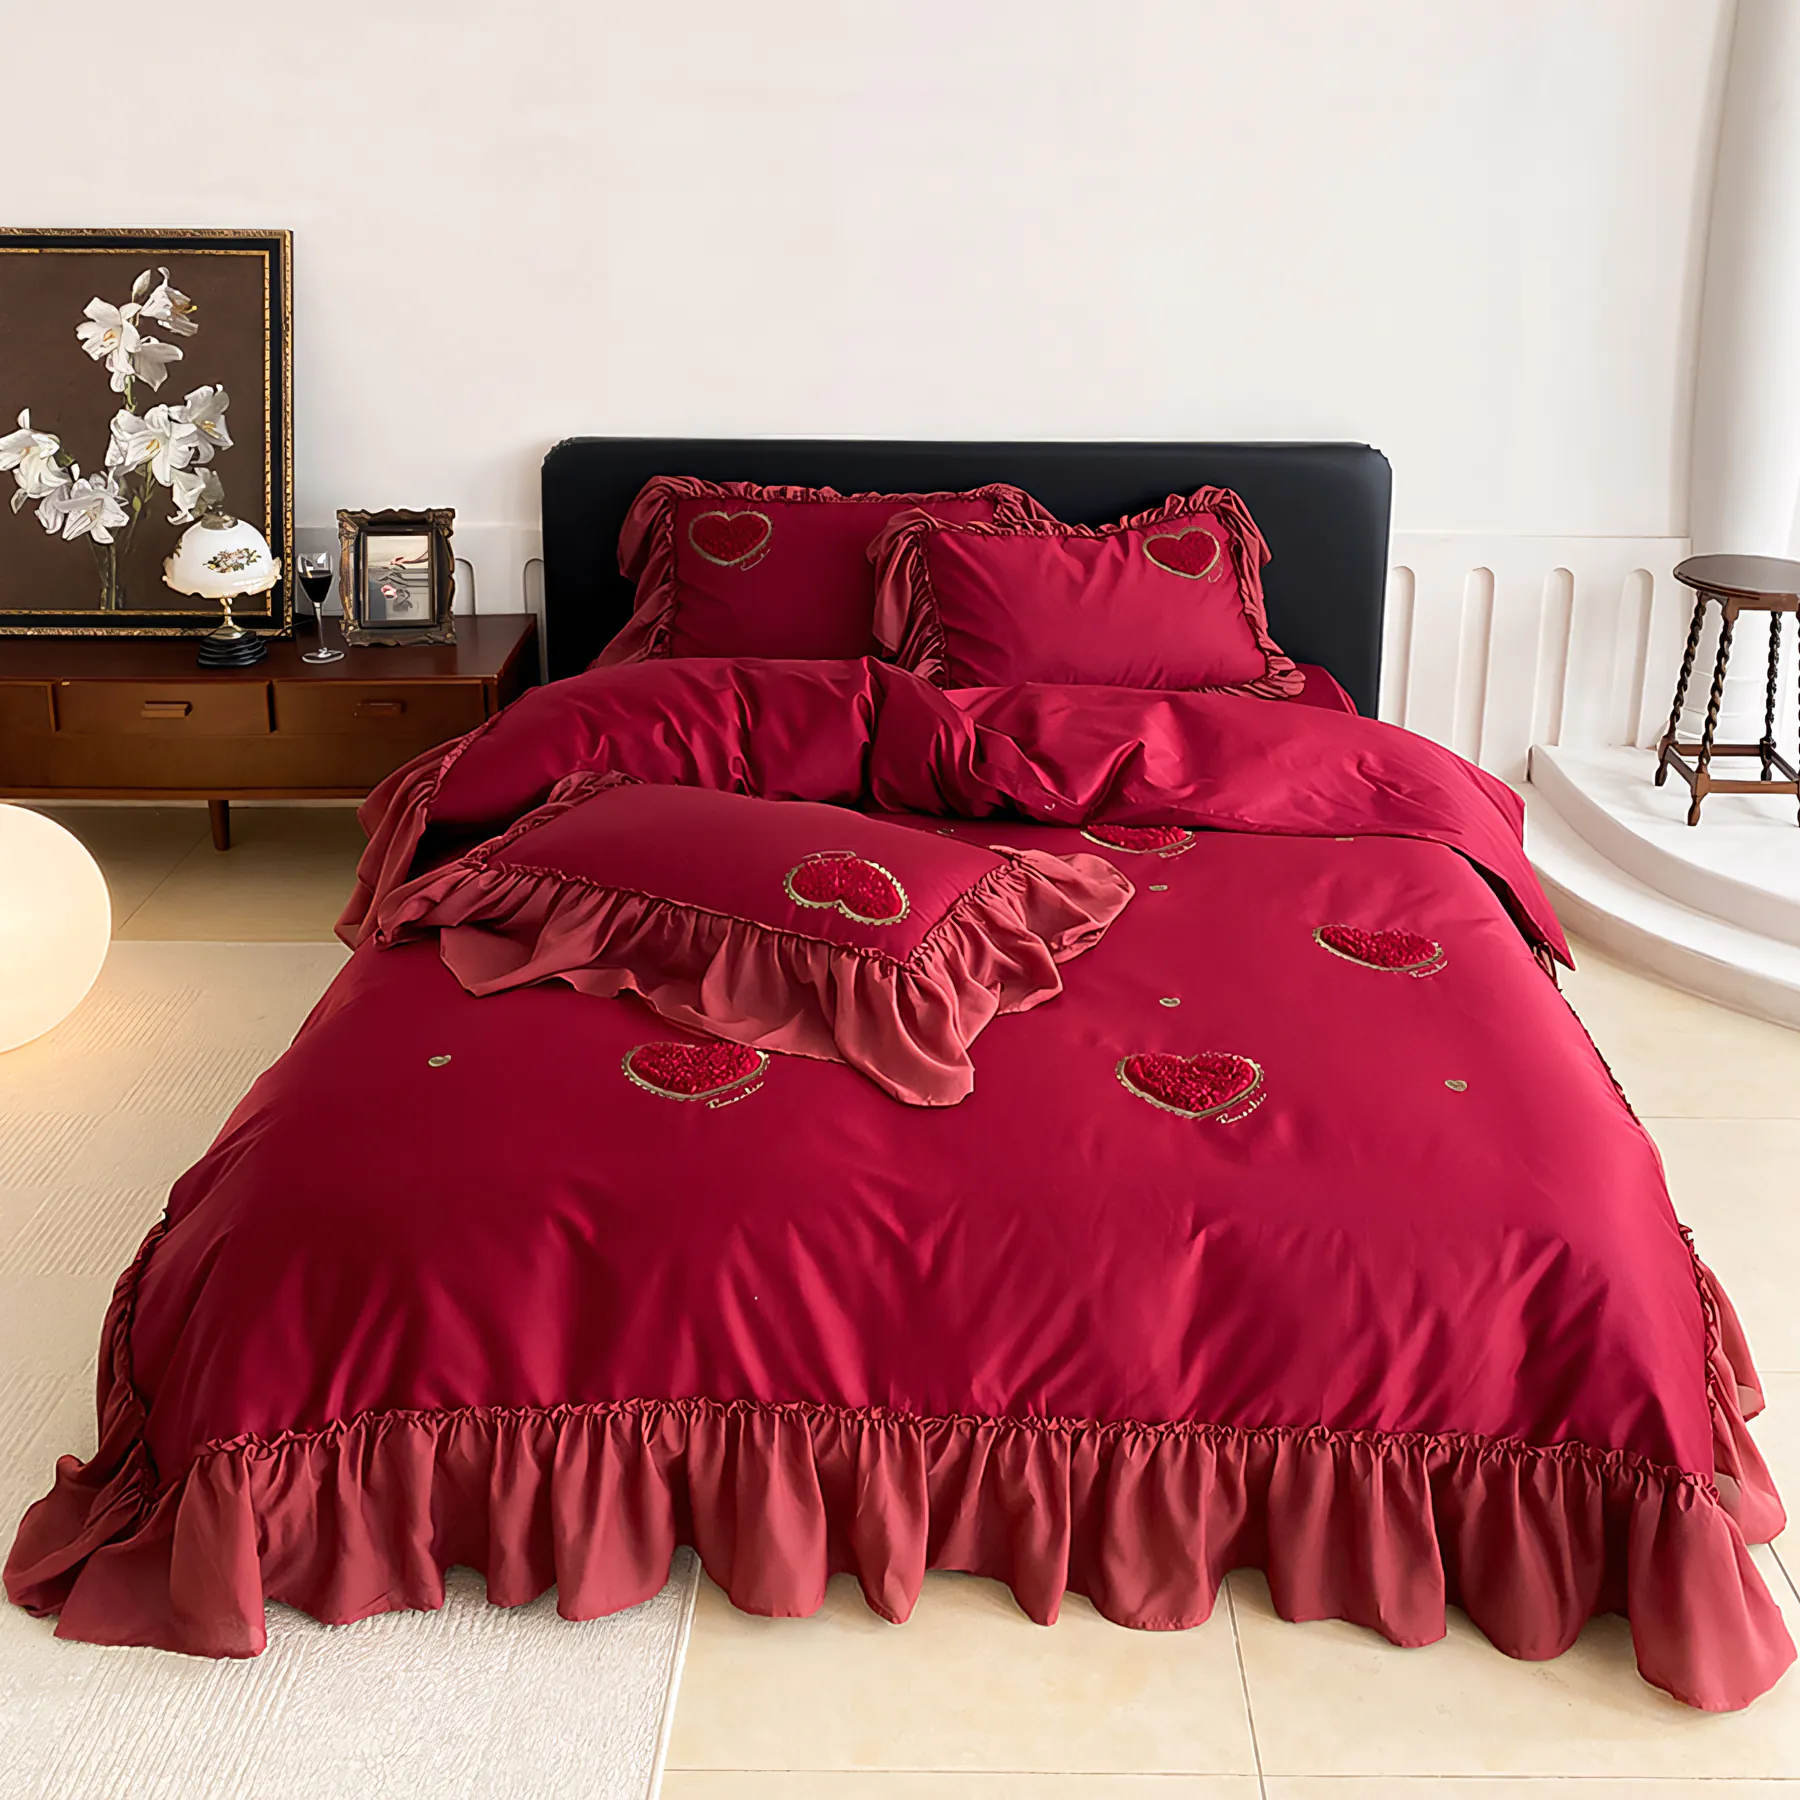 Romantic Ruffle Edge Egyptian Cotton Red Love Heart Bedding 4 Pcs Set01